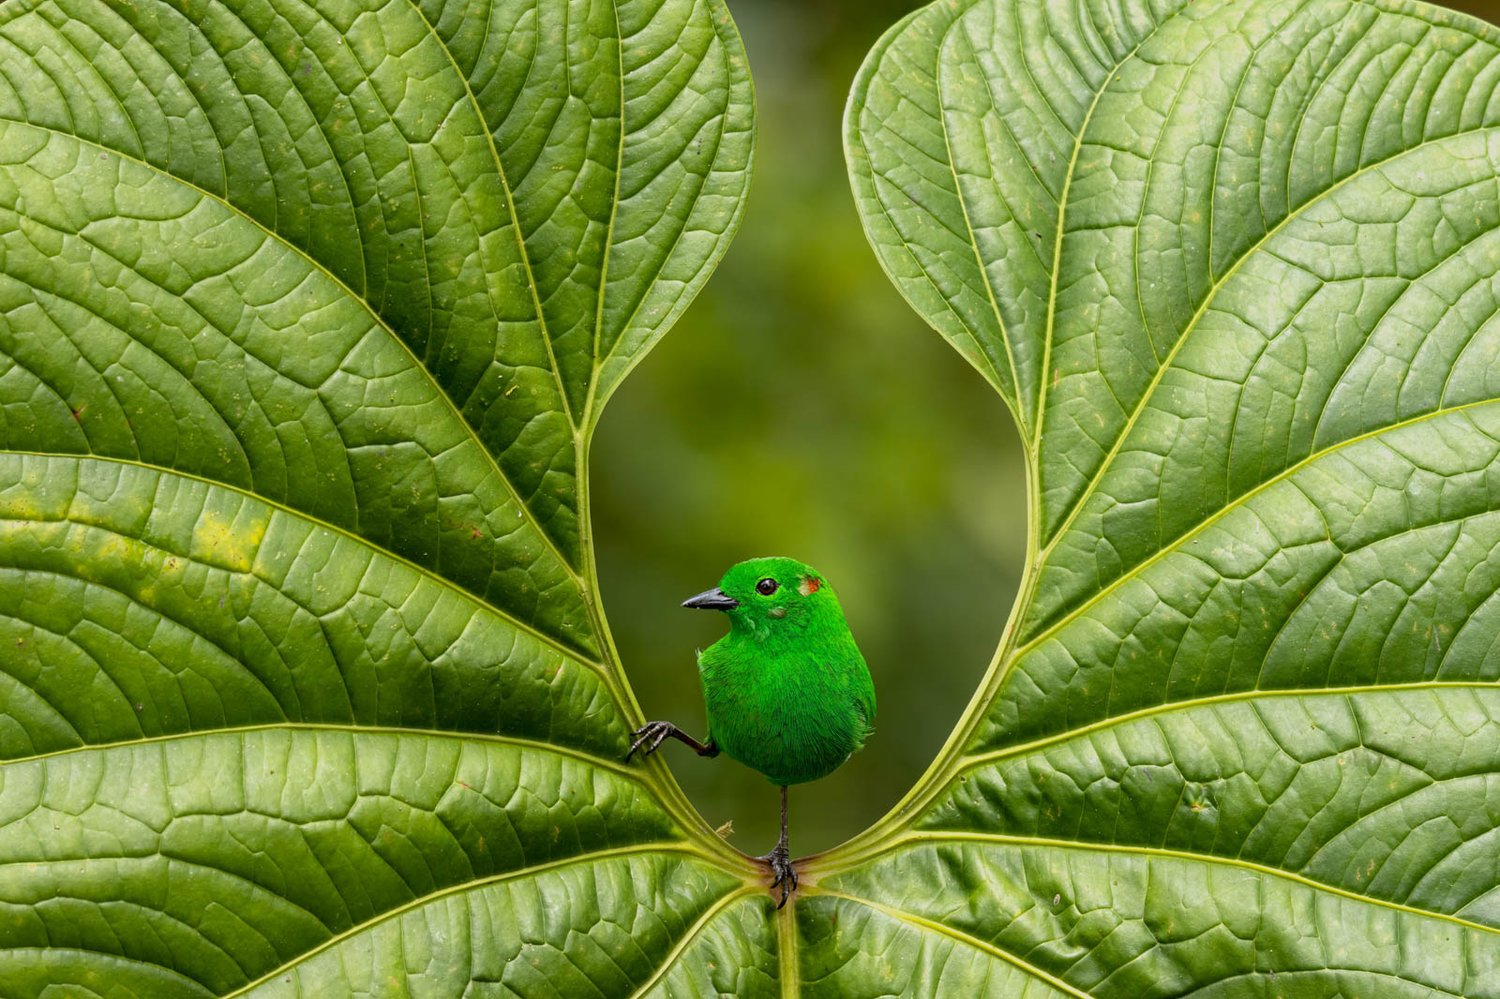 These award-winning bird photos will brighten up your day